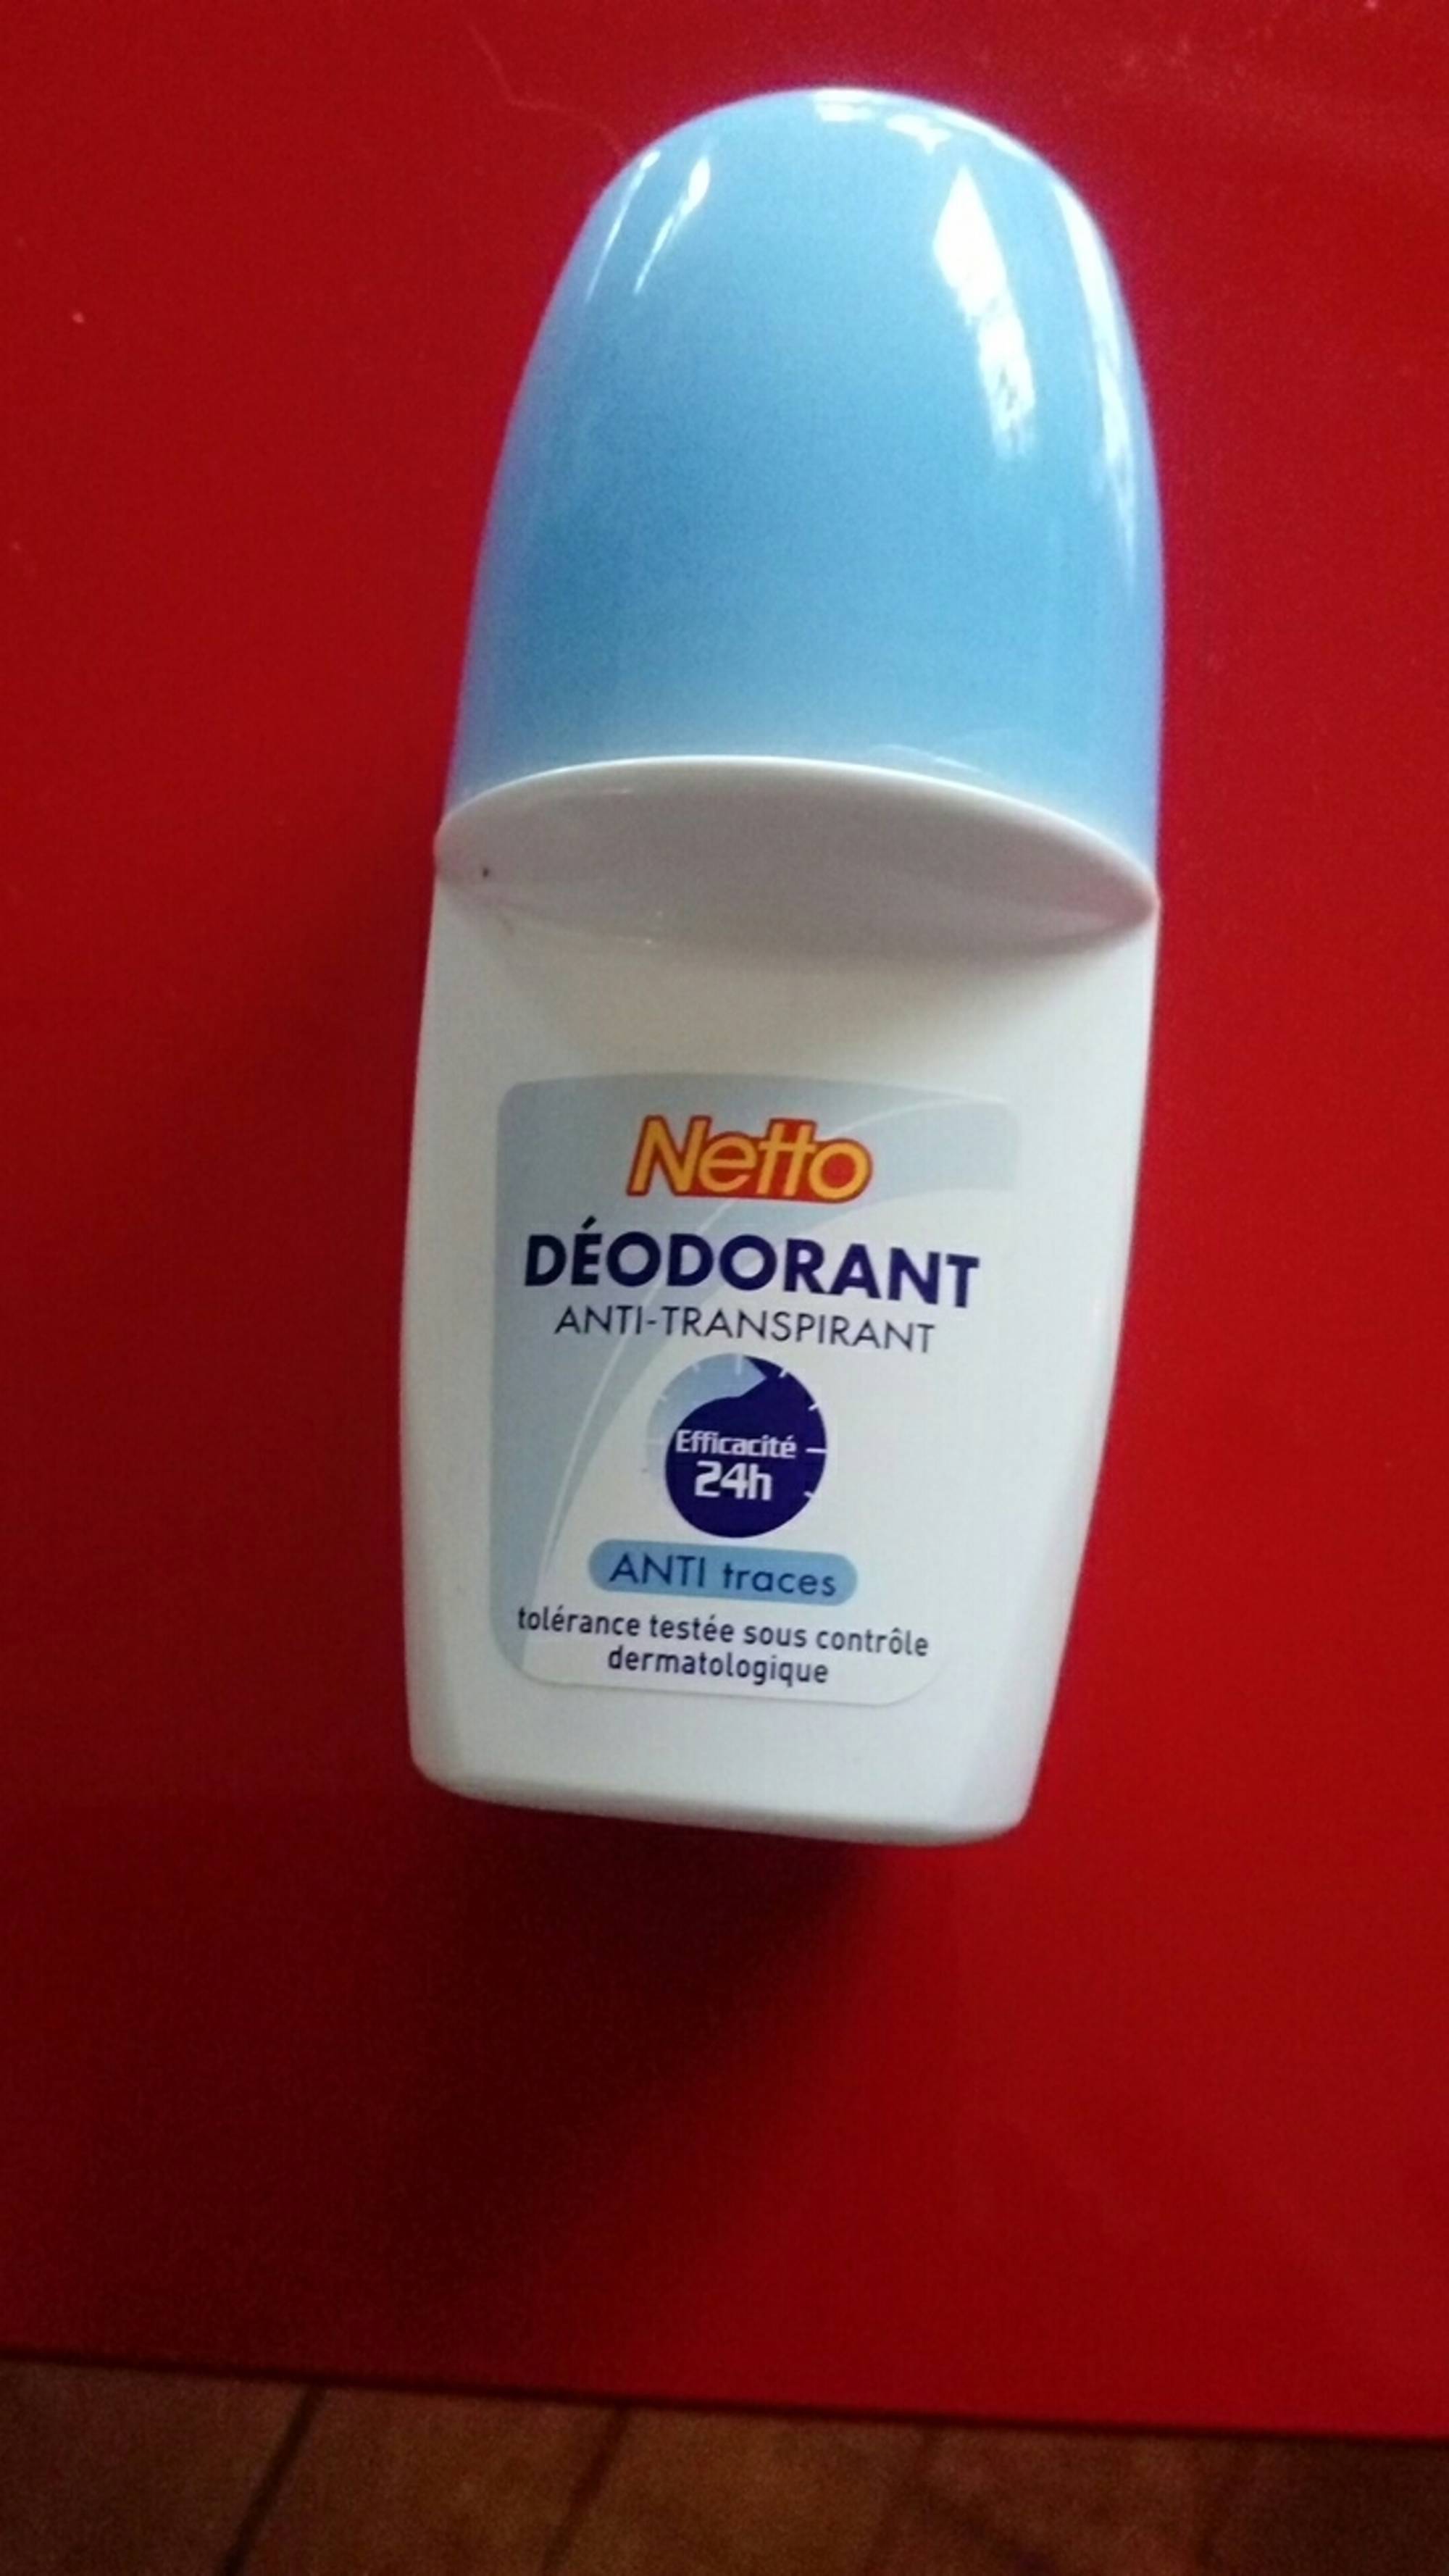 NETTO - Déodorant anti-traspirant efficacité 24h